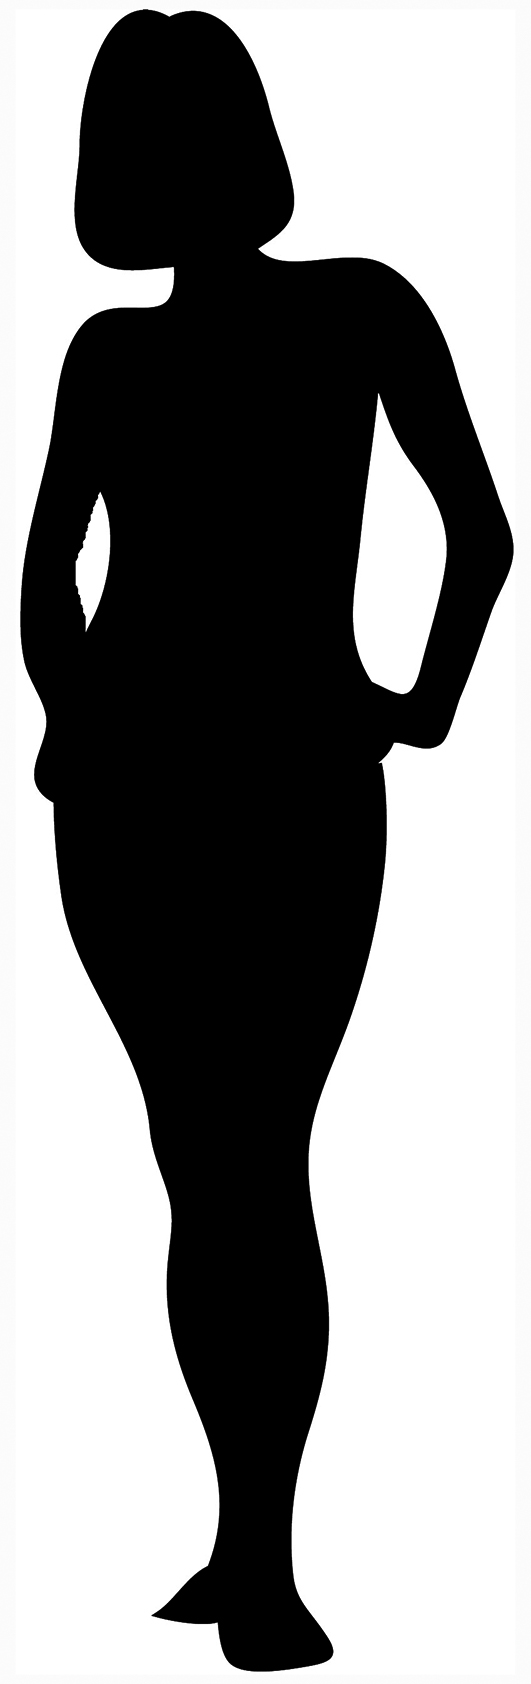 Woman Silhouette Clip Art Fre